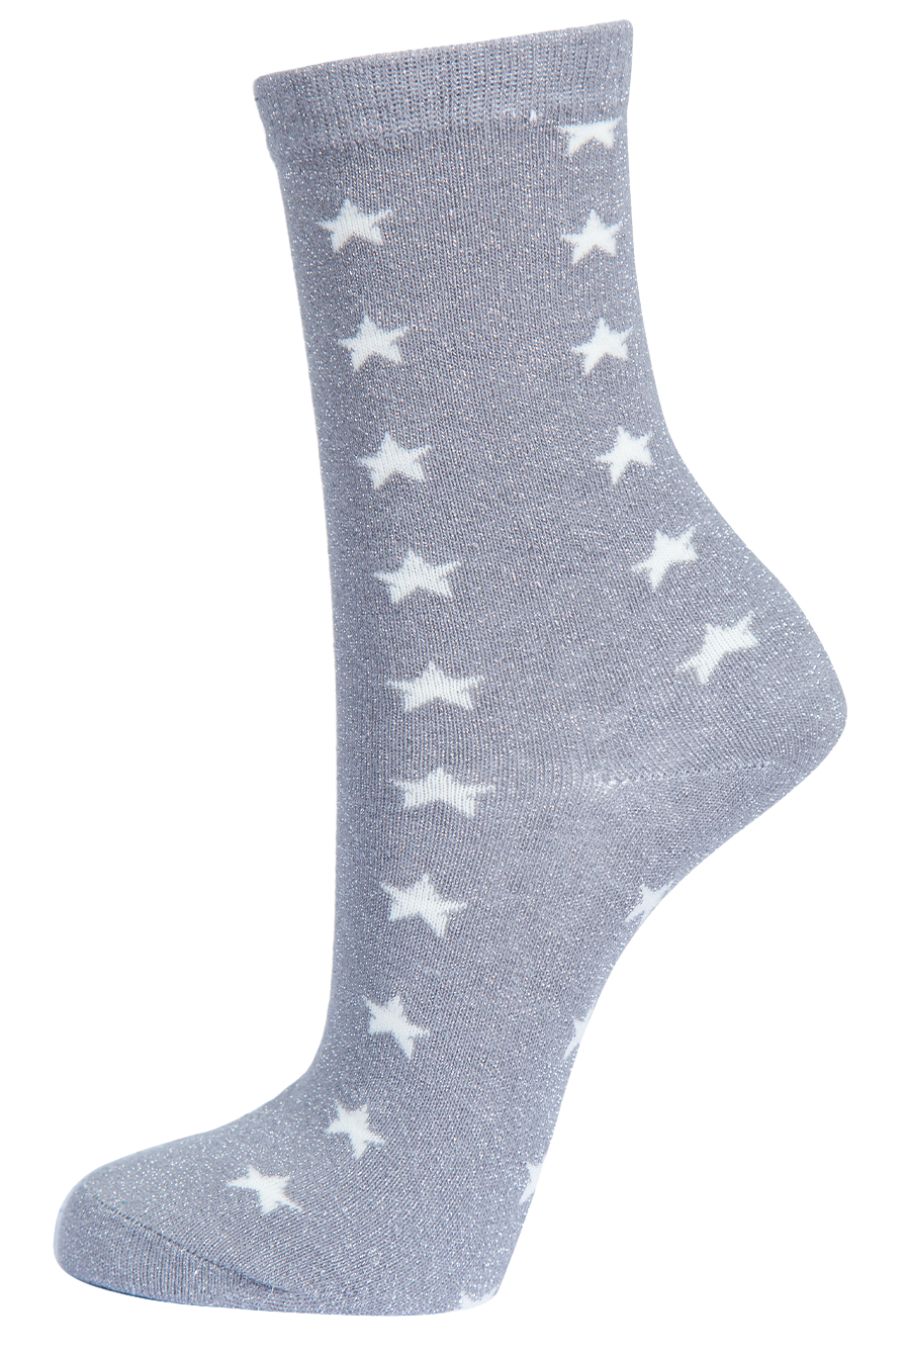 Dark Grey & White Star Glitter Socks